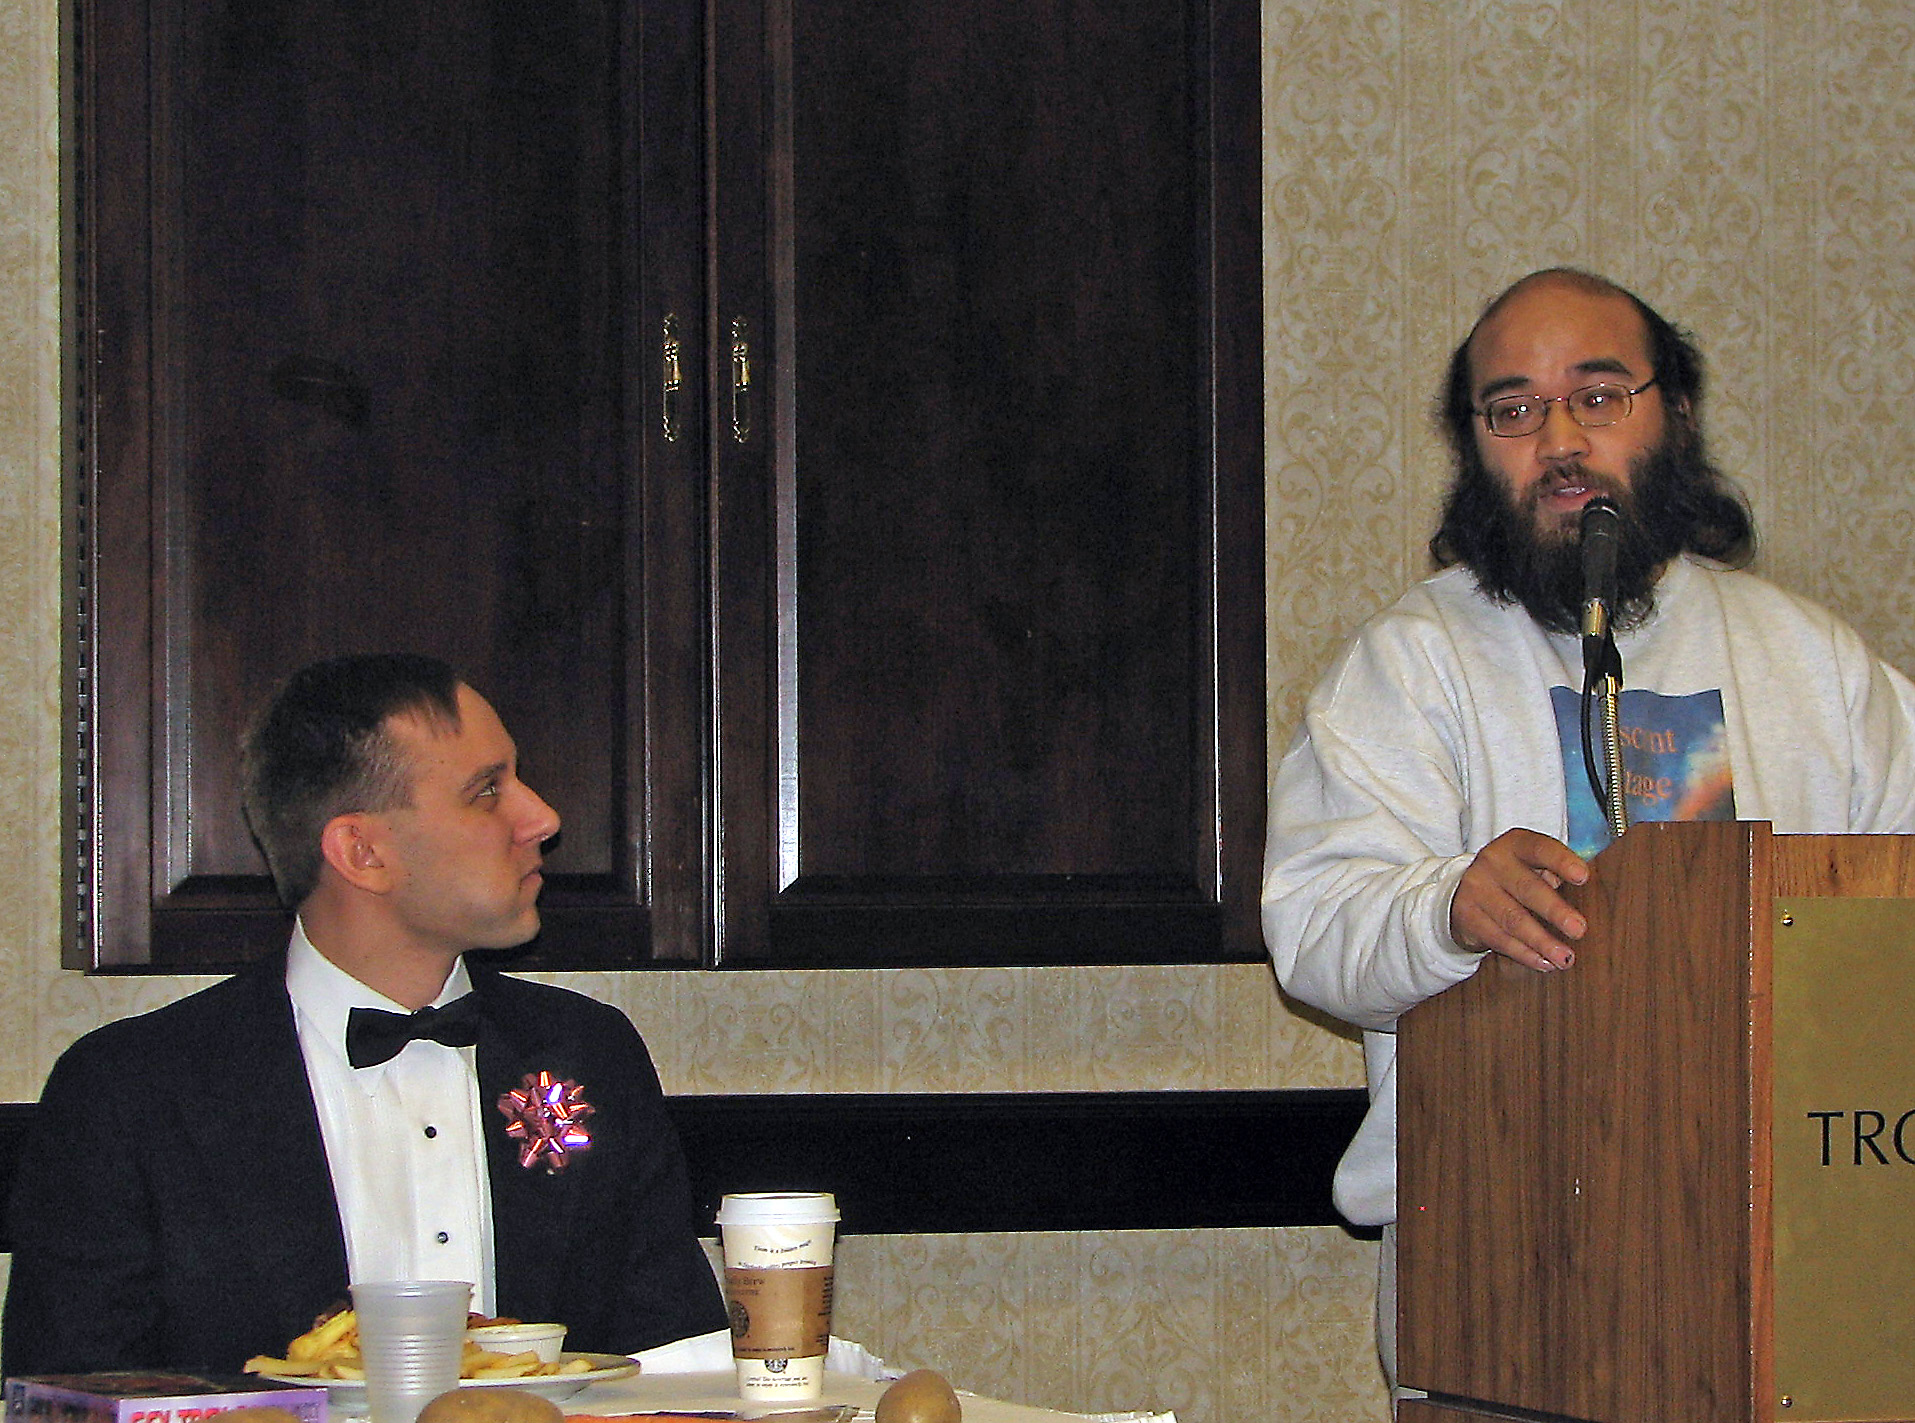 man giving a speech at a formal event